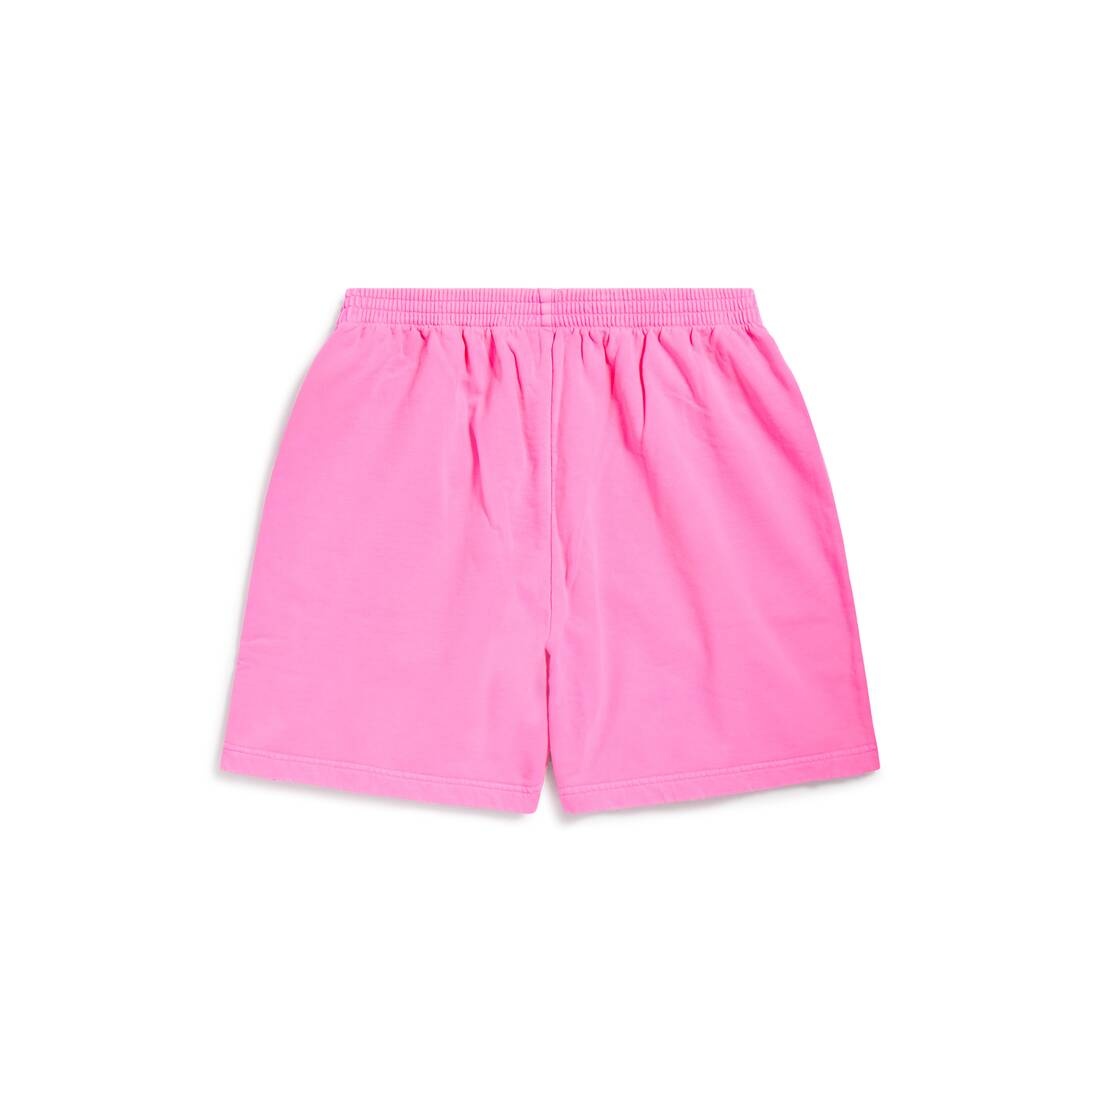 Women's Balenciaga Back Sweat Shorts in Fluo Pink - 2